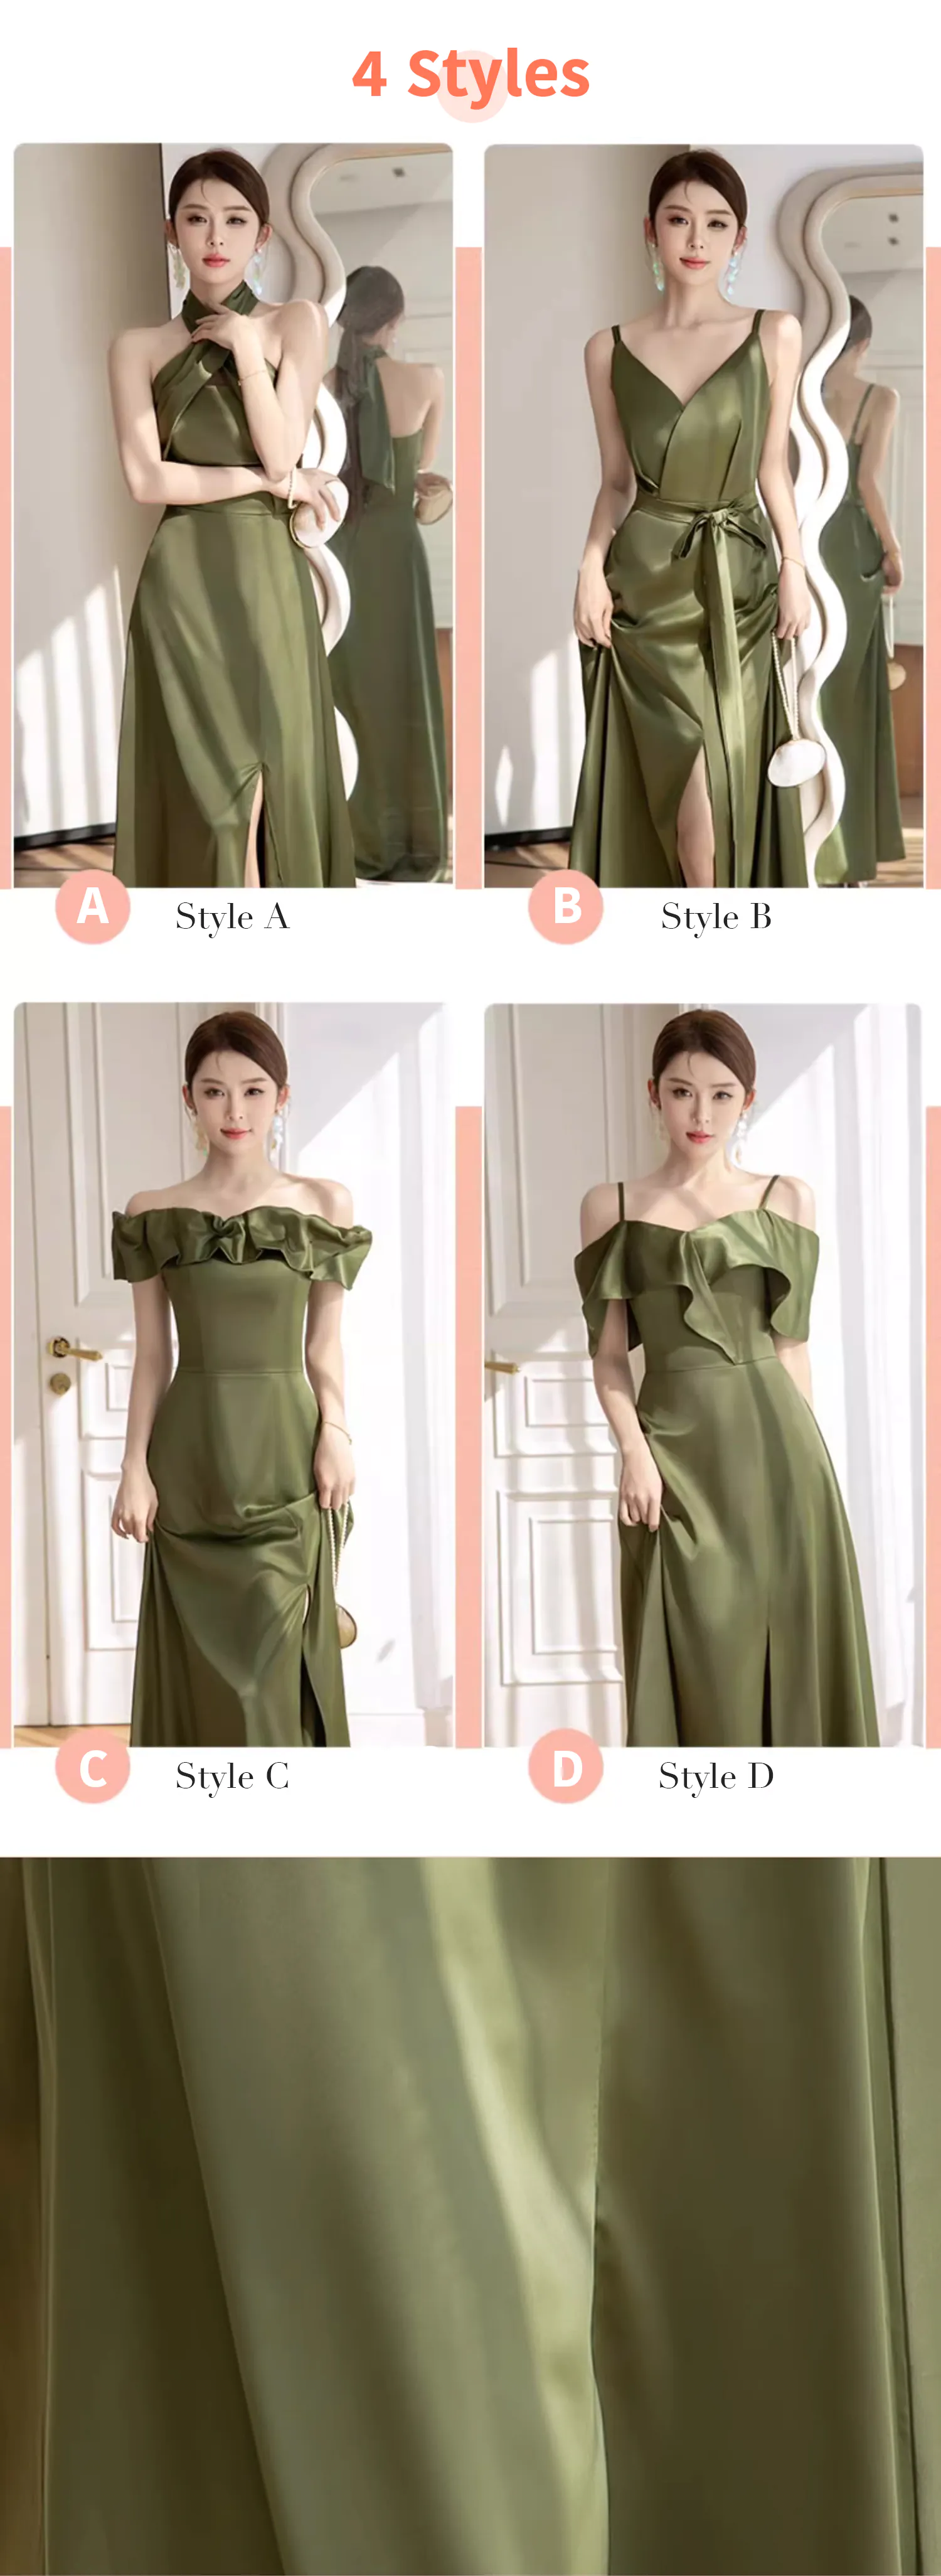 Simple-Emerald-Green-Satin-Boho-Wedding-Bridesmaid-Dress-Party-Gown13